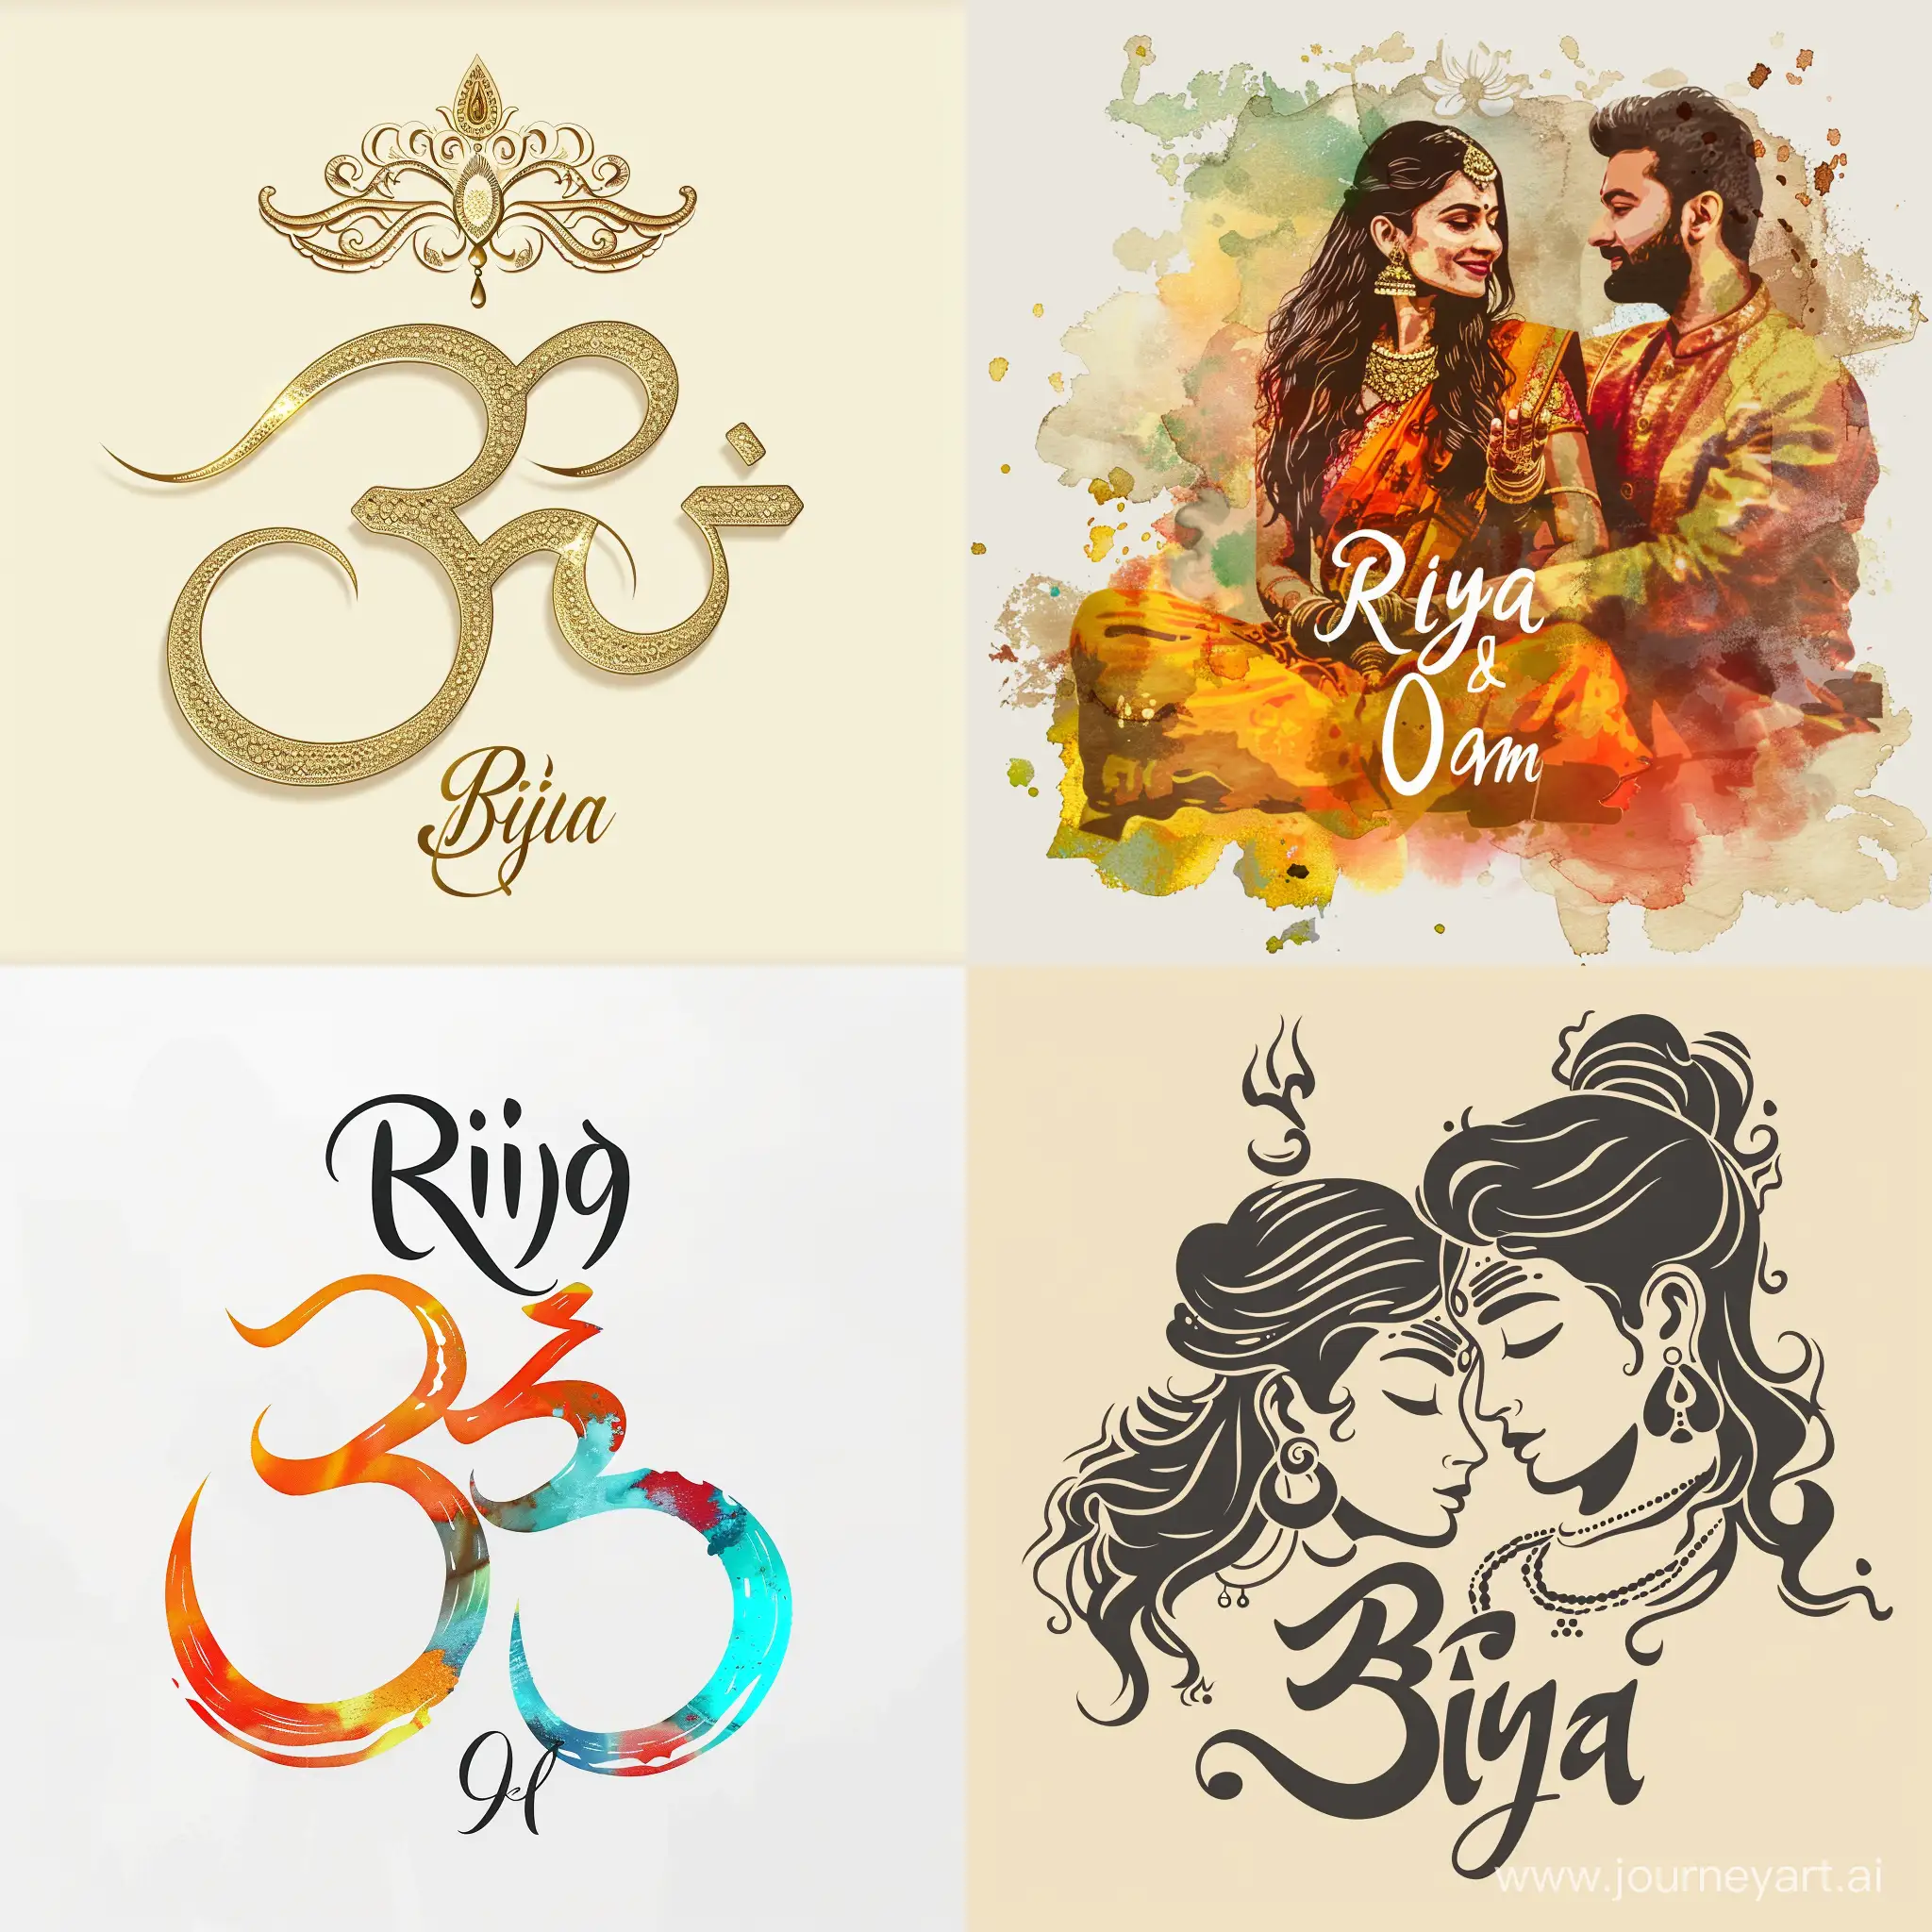 make a stylish text for couple. "Riya" "Om".